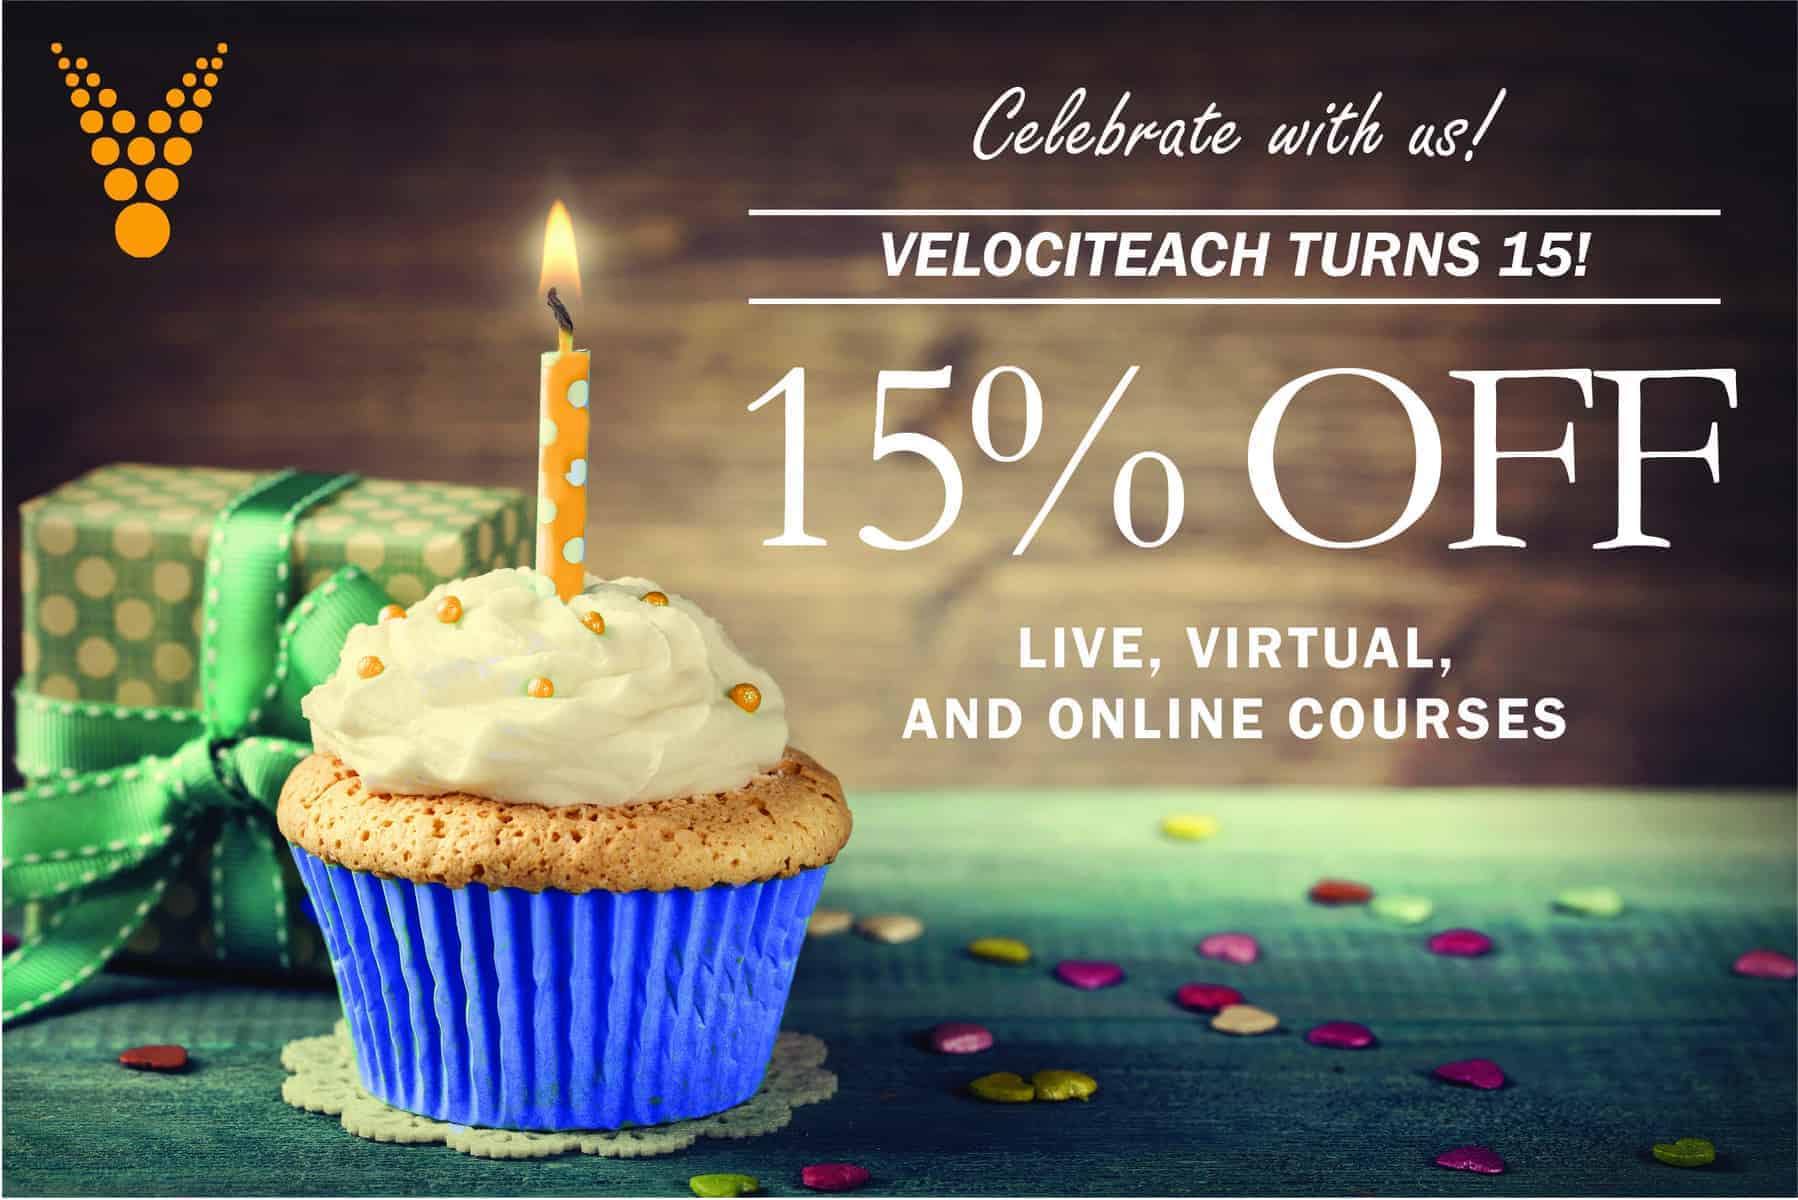 Happy 15th Birthday, Velociteach!